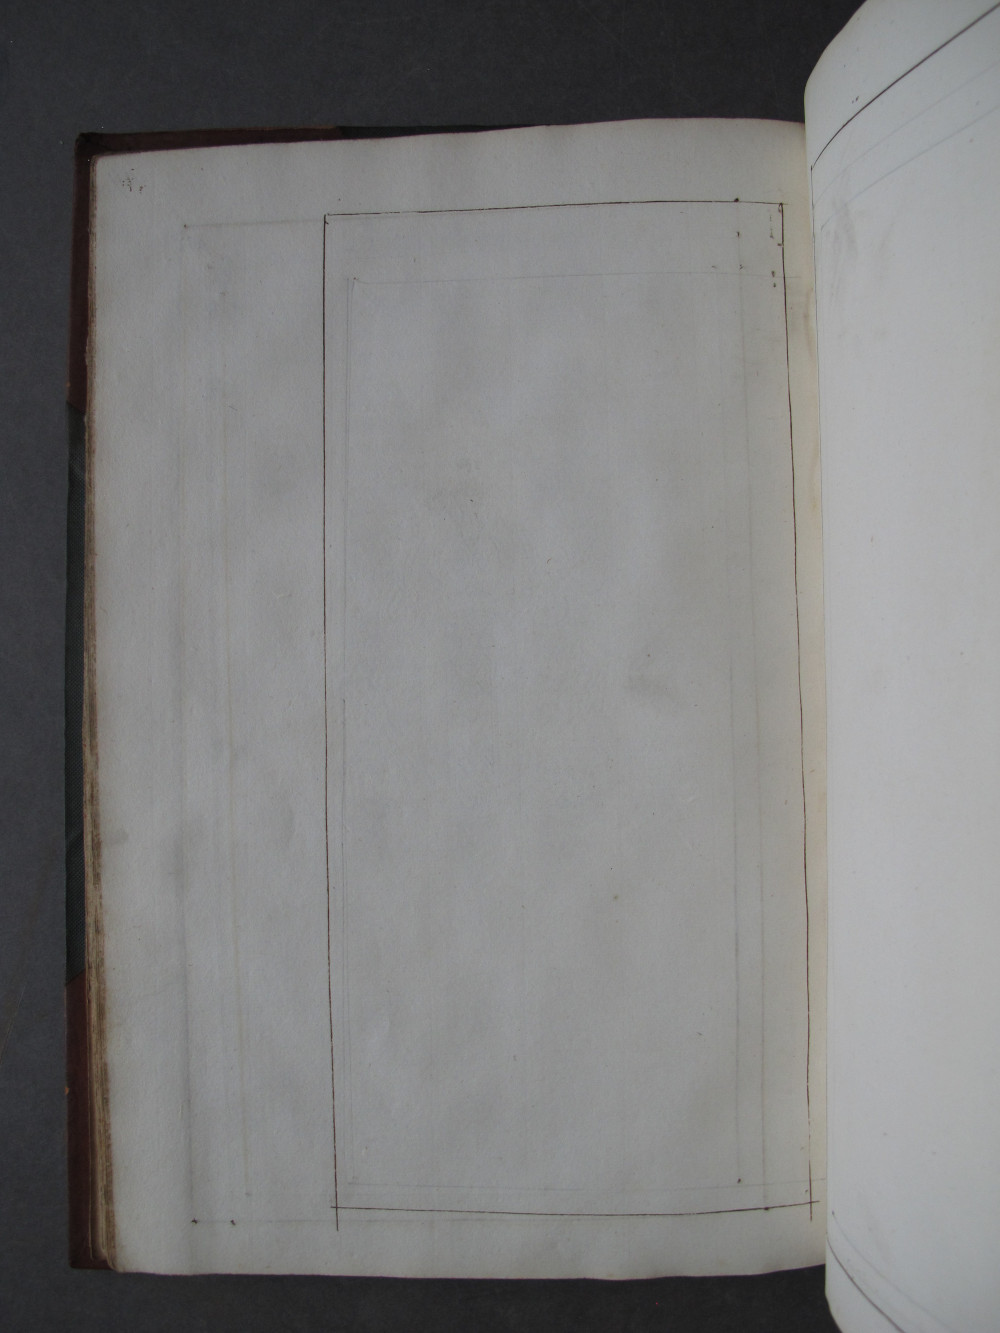 Folio 43 verso